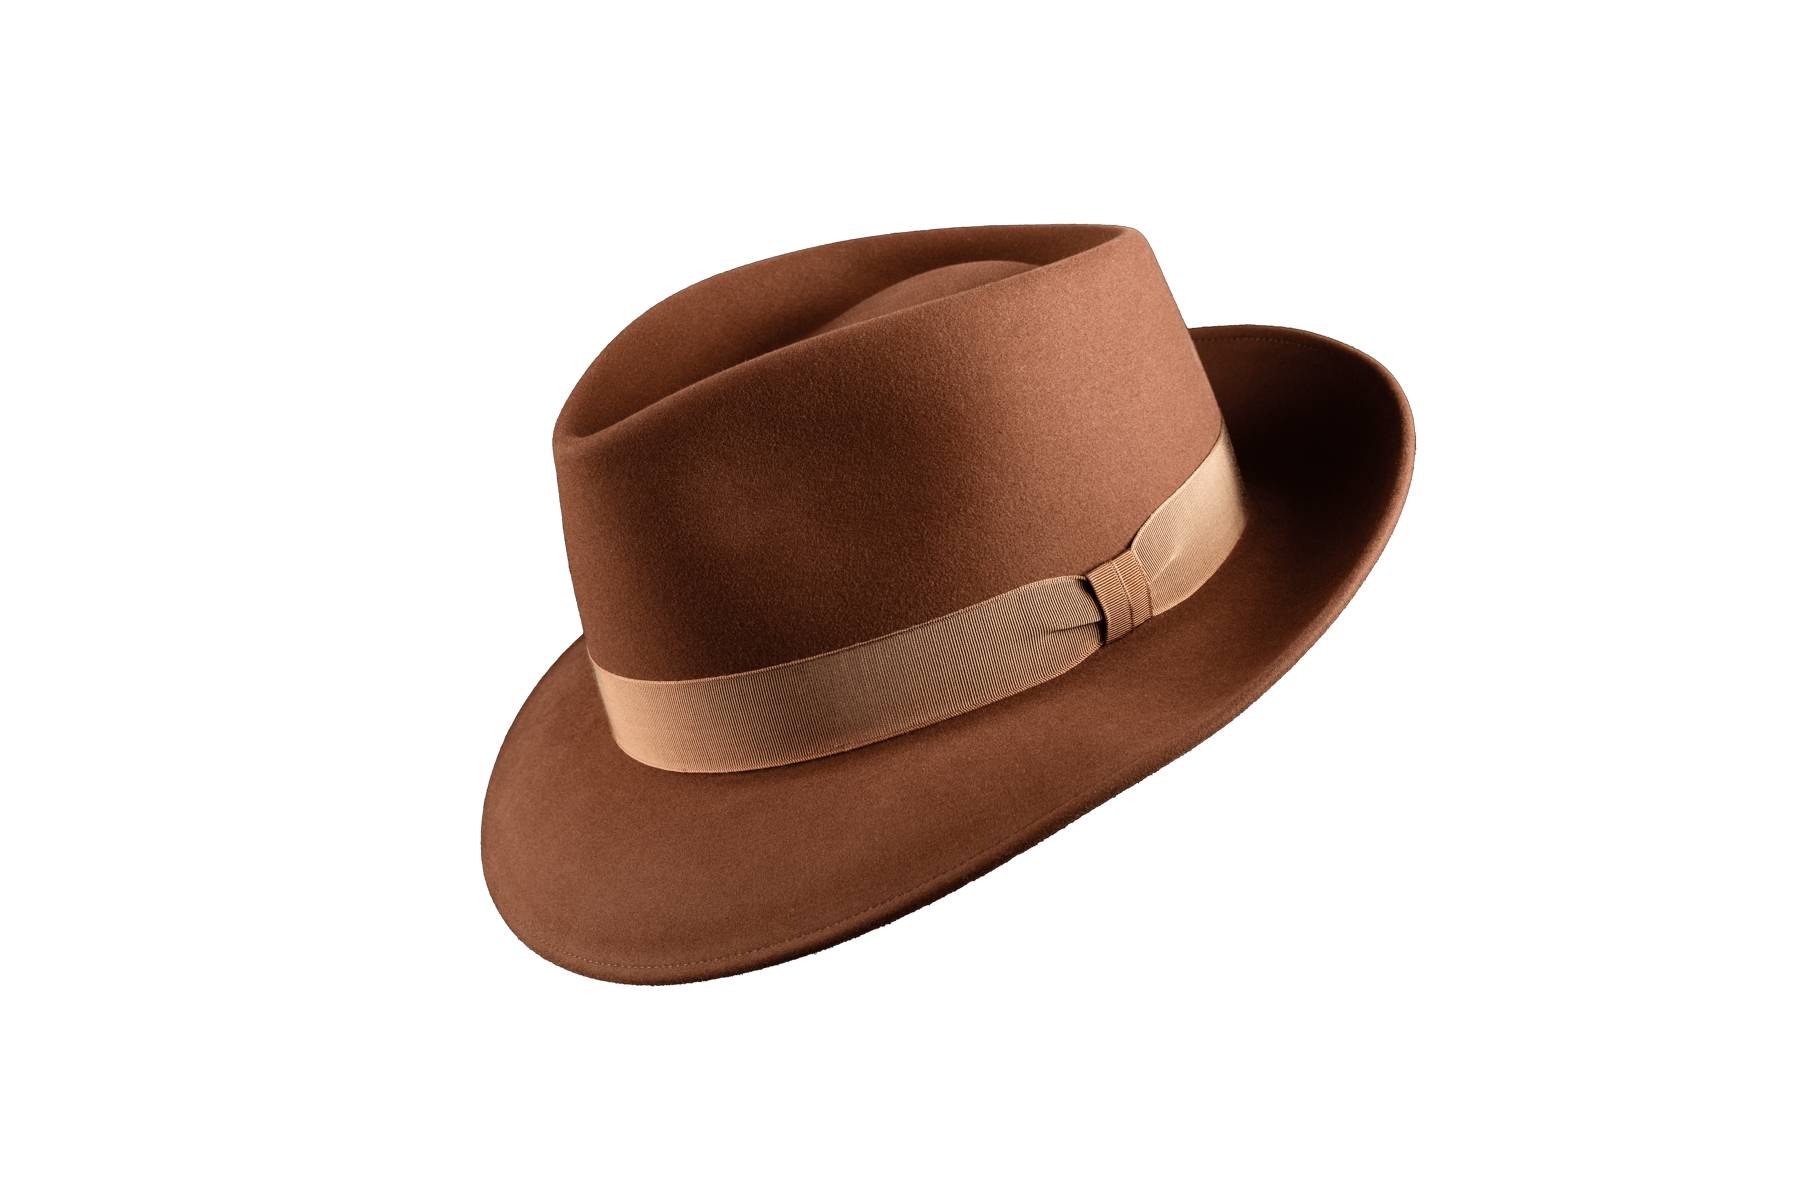 Optimo Hats: The Art of the Hatmaker